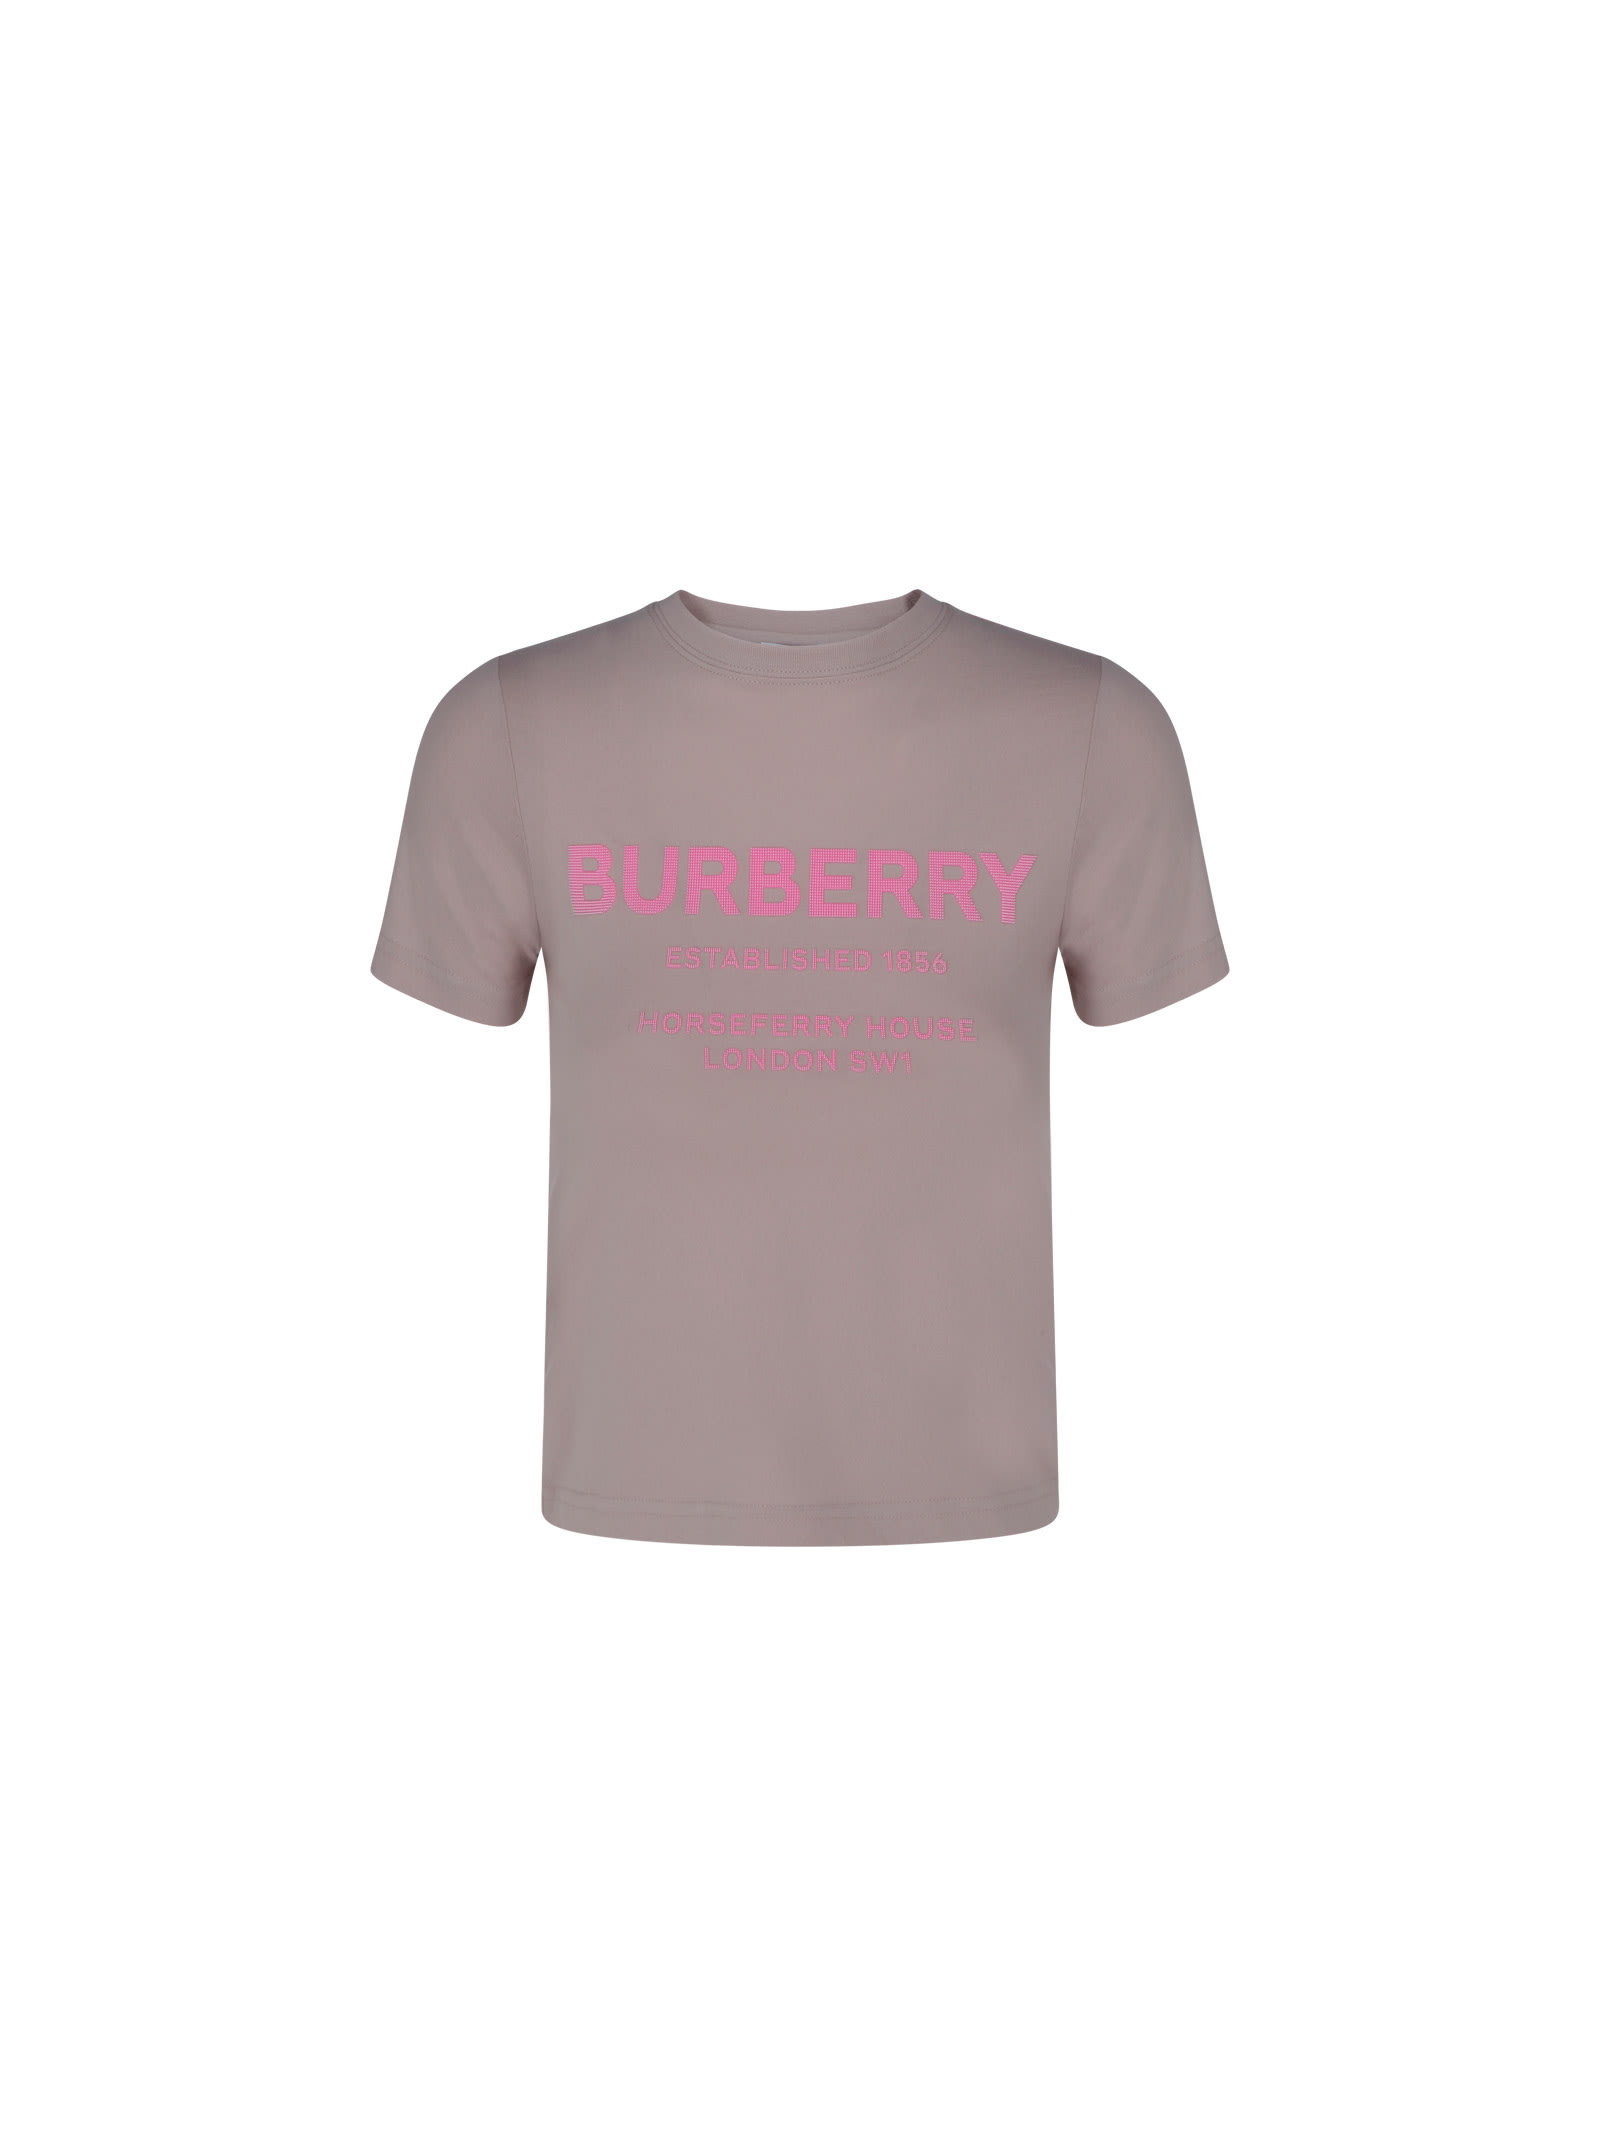 Burberry Bristle T-shirt For Girls